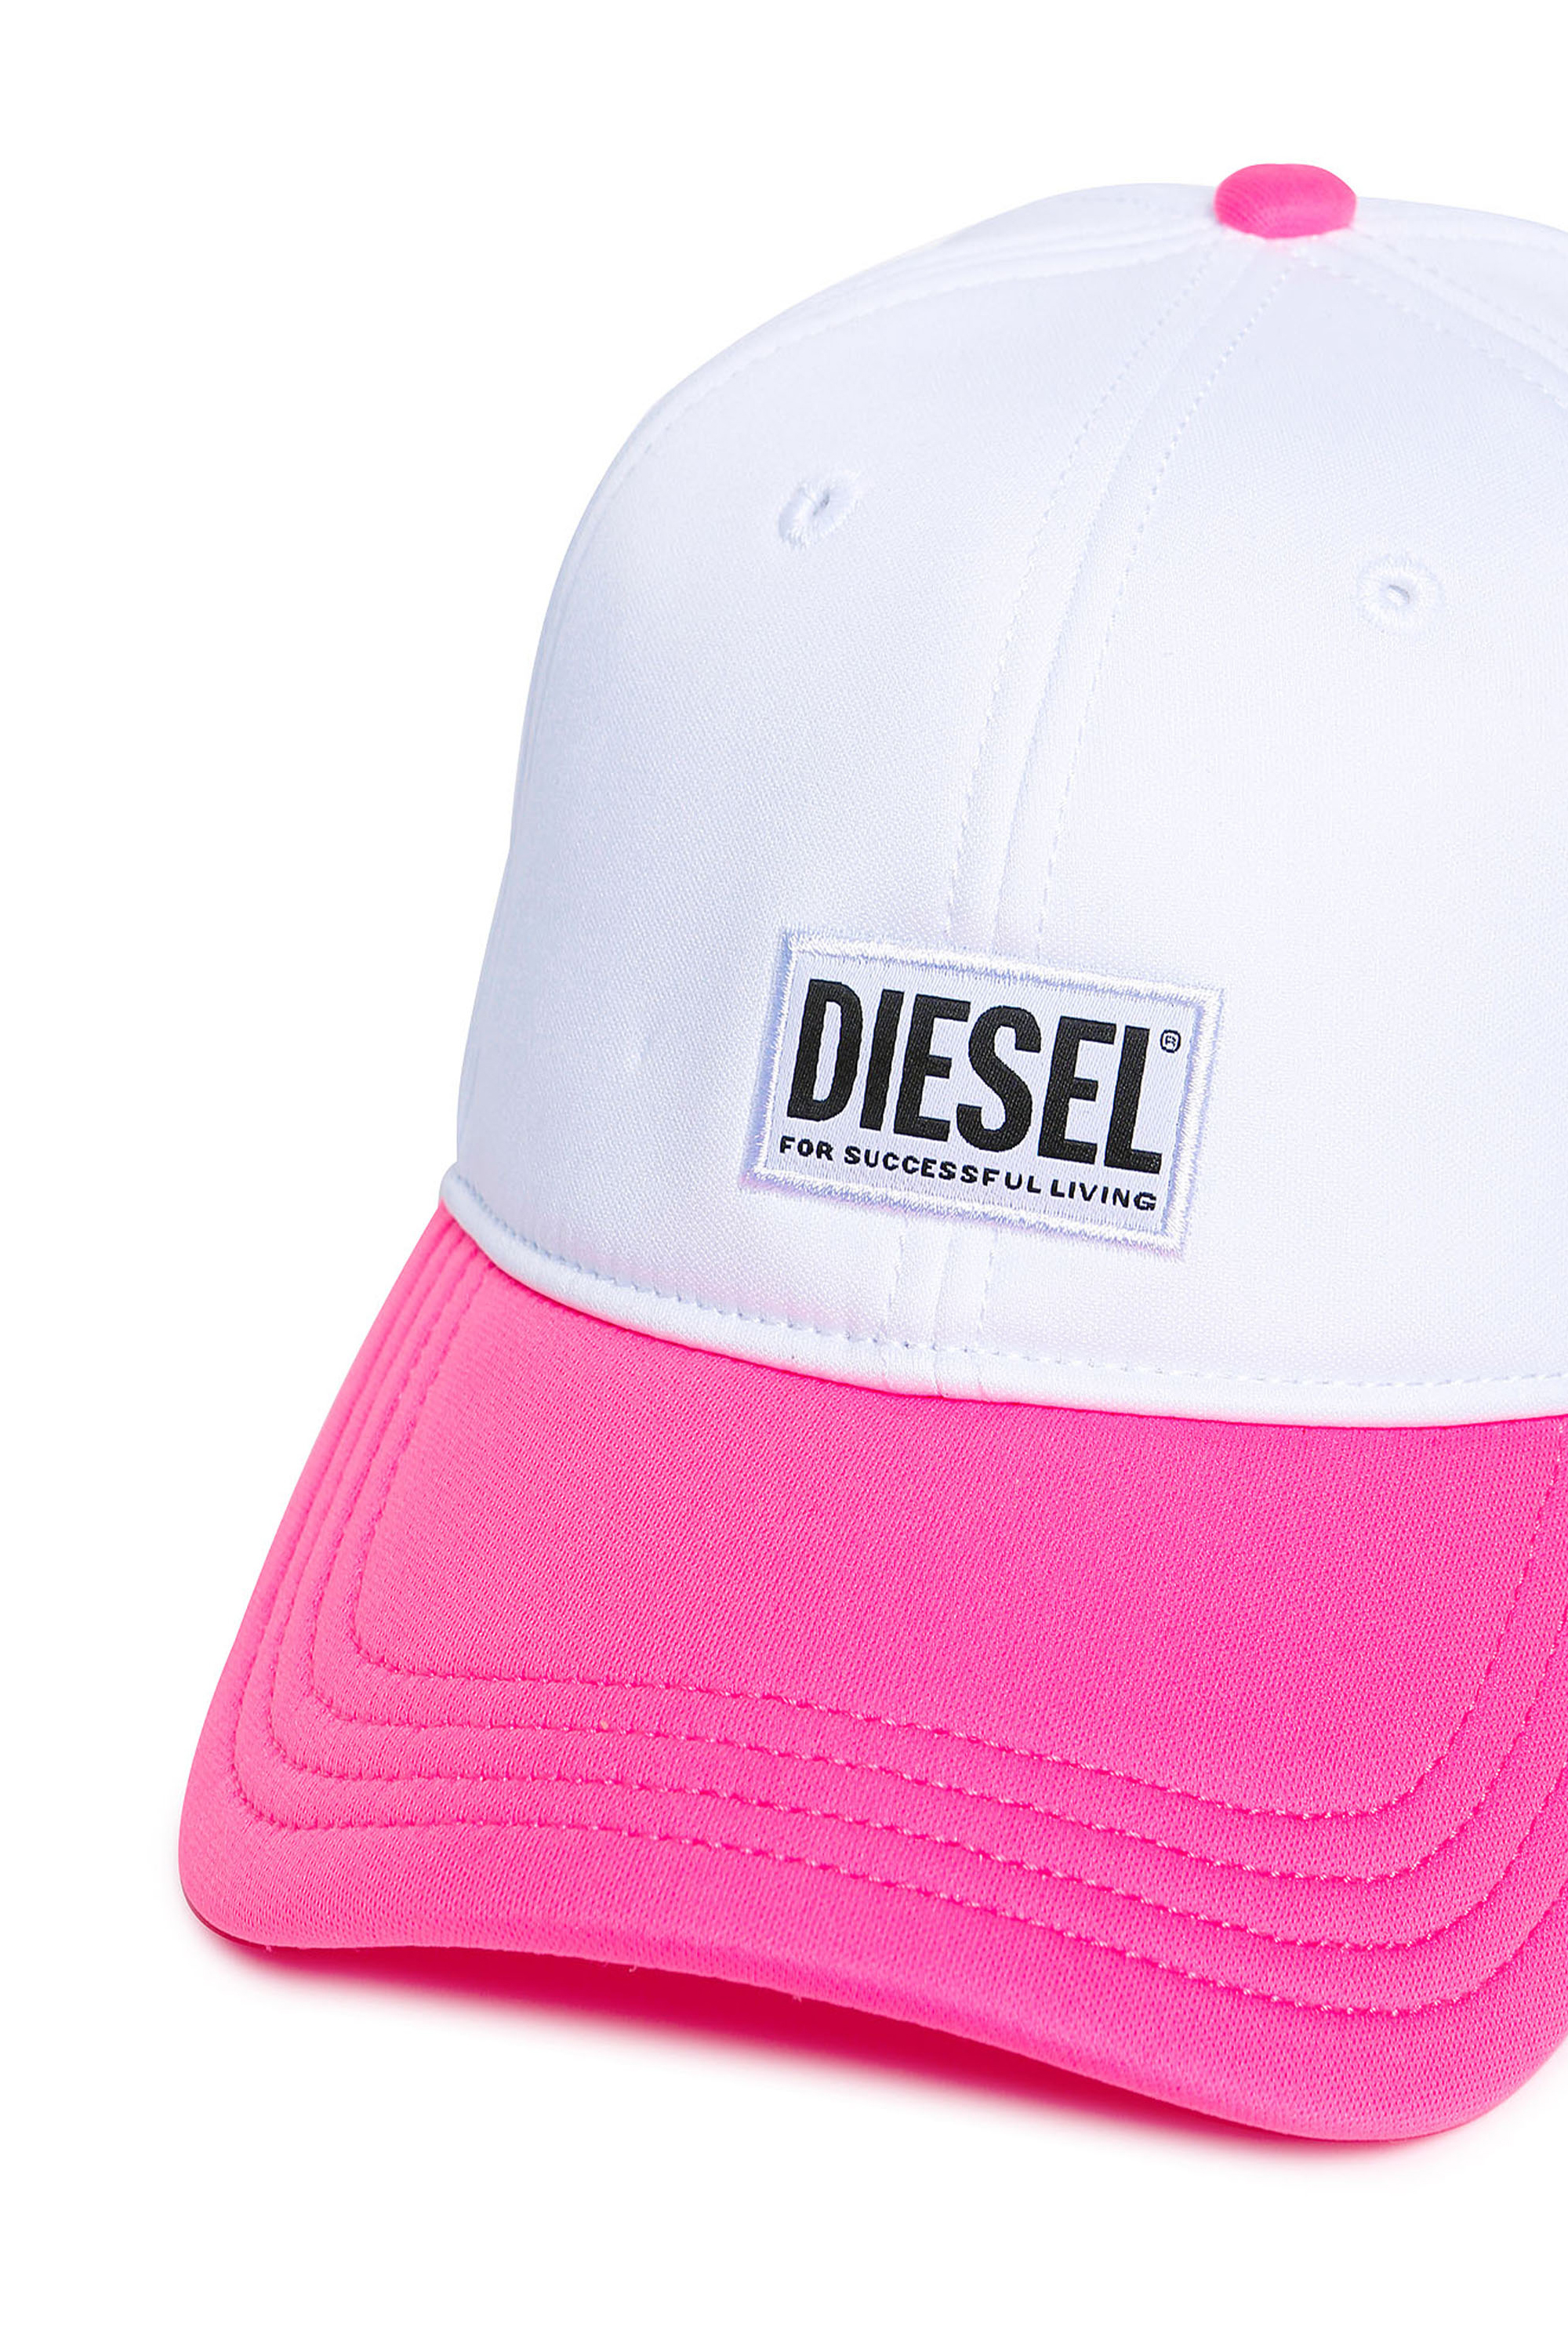 Diesel - FDURBO, Blanc/Rose - Image 3